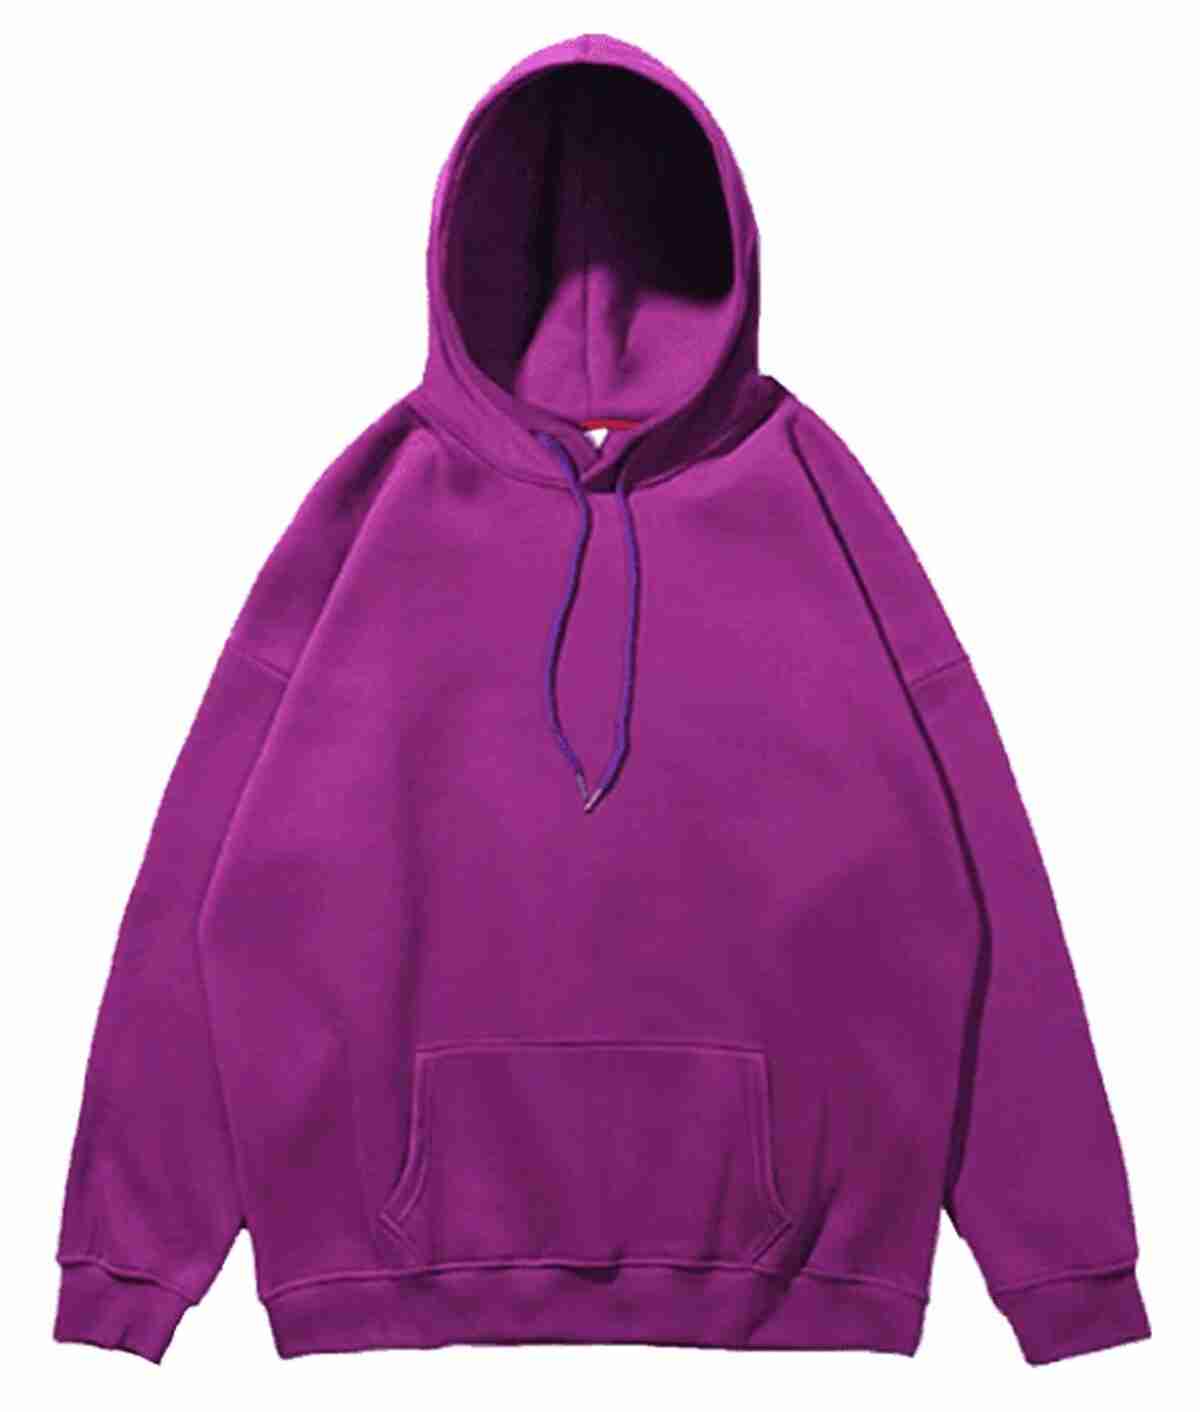 Song Kang Nevertheless Purple Hoodie | Celebrity jacket